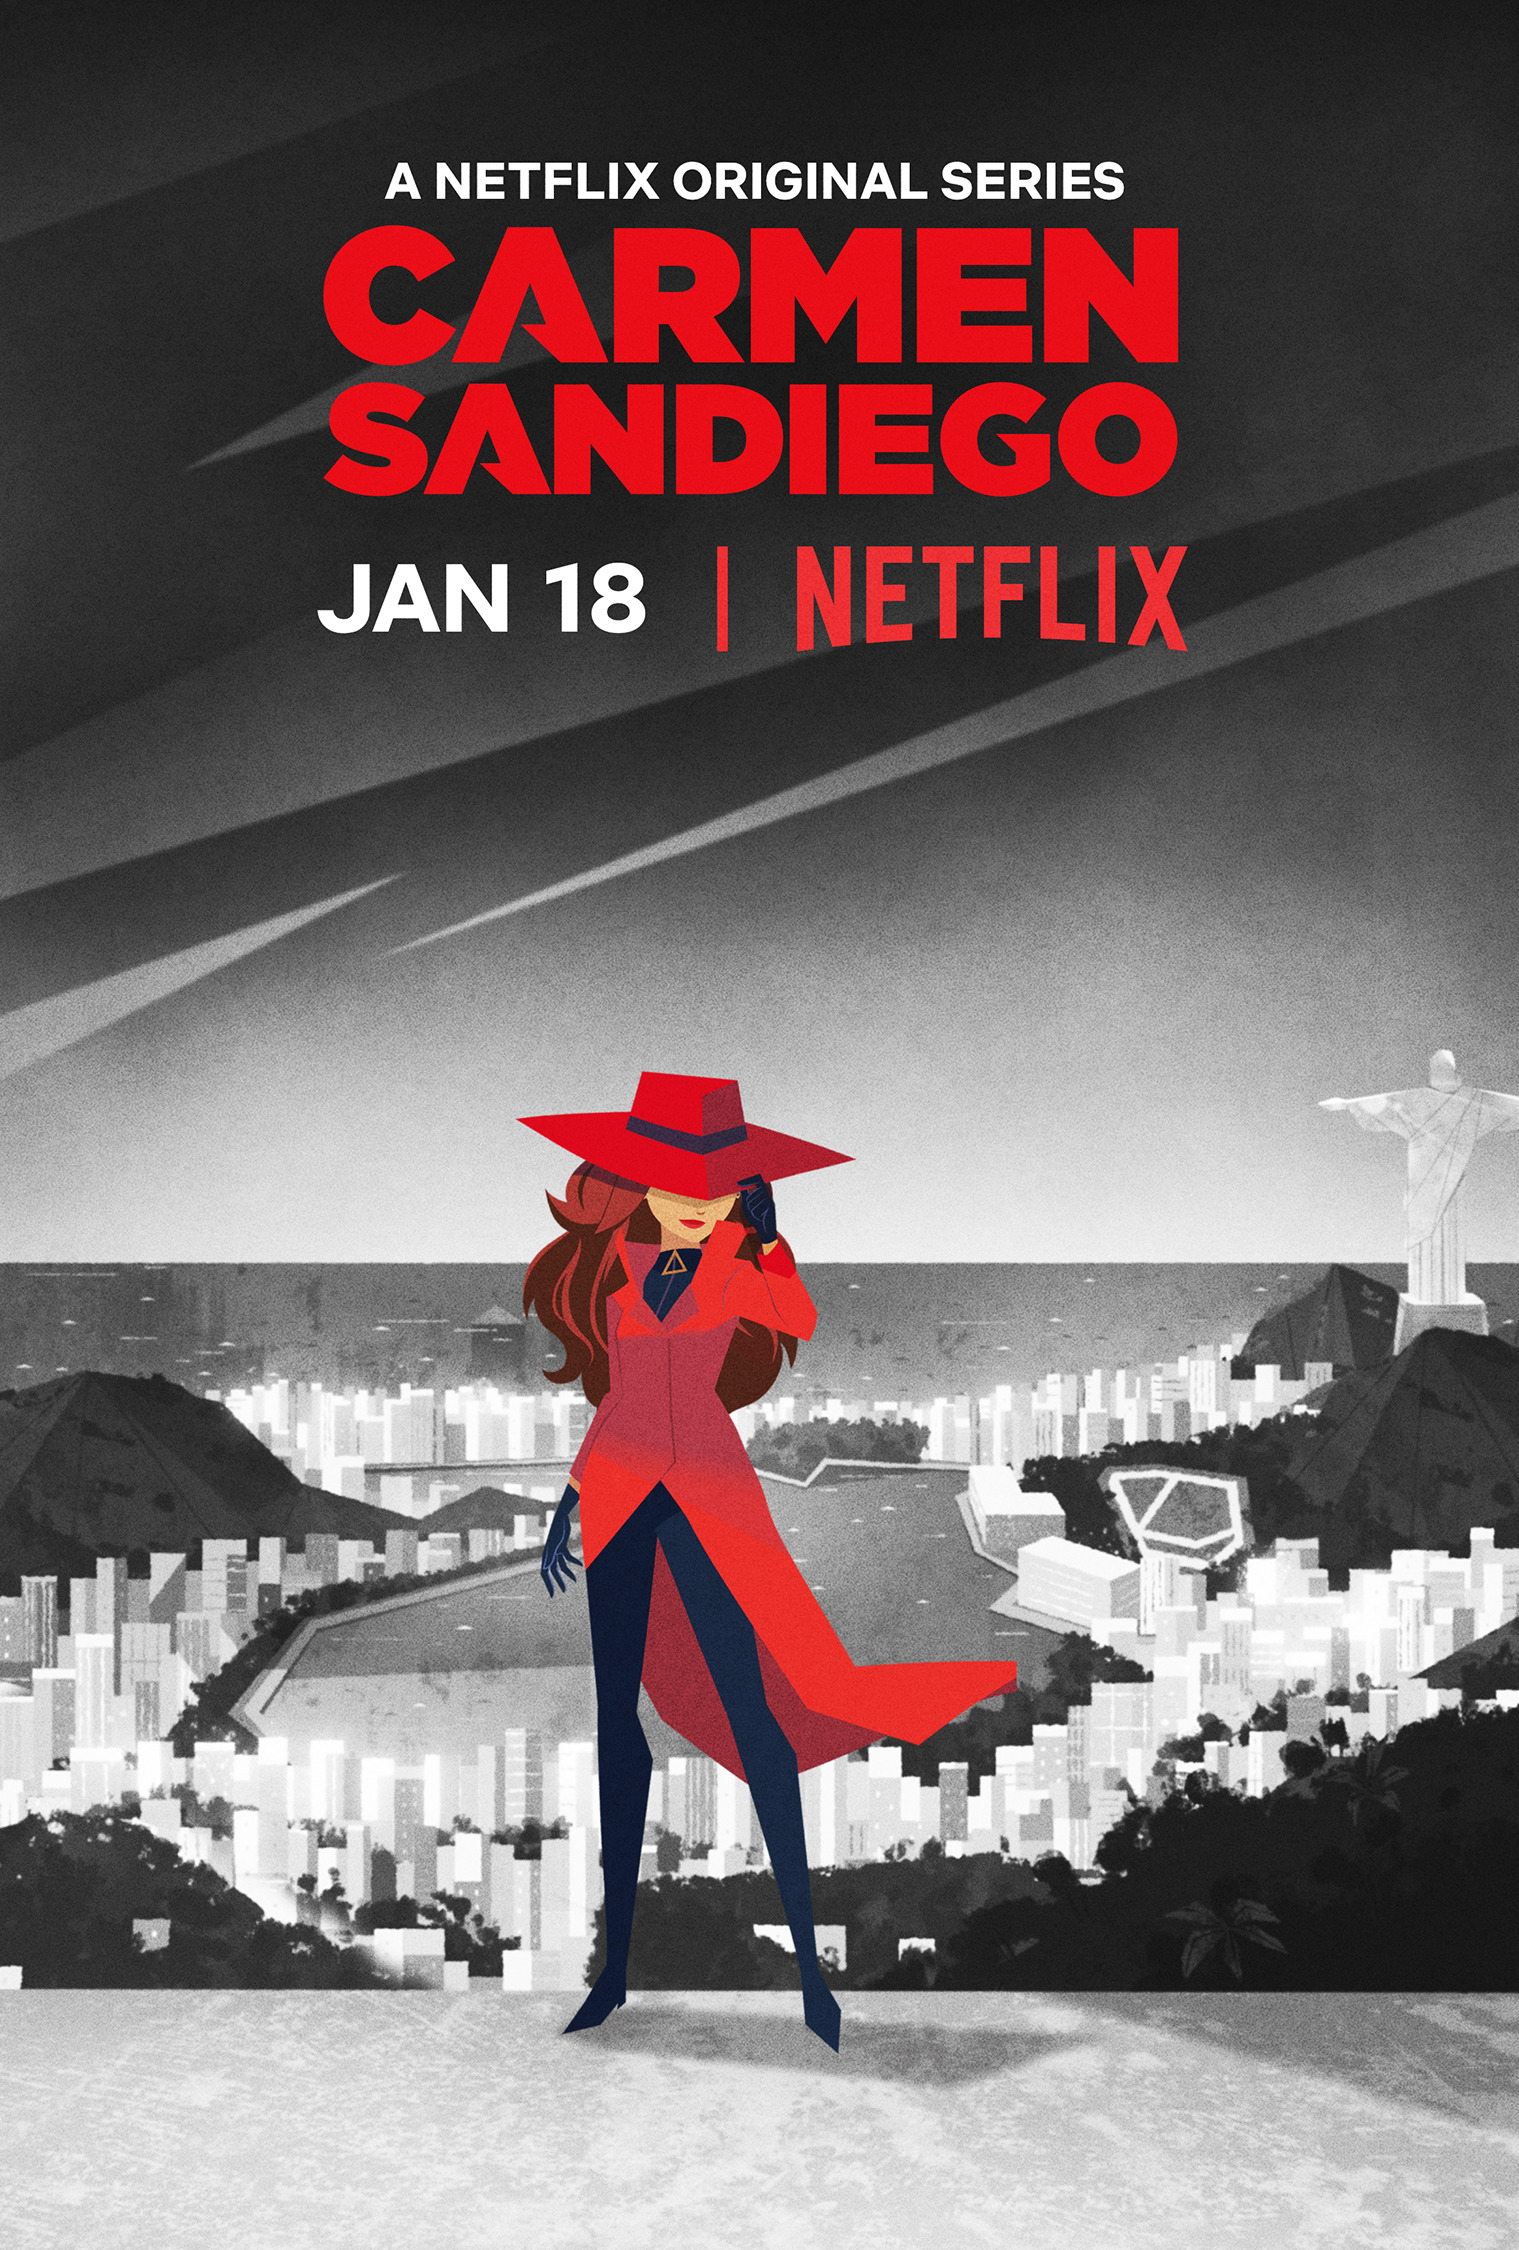 Mega Sized Movie Poster Image for Carmen Sandiego (#2 of 3)